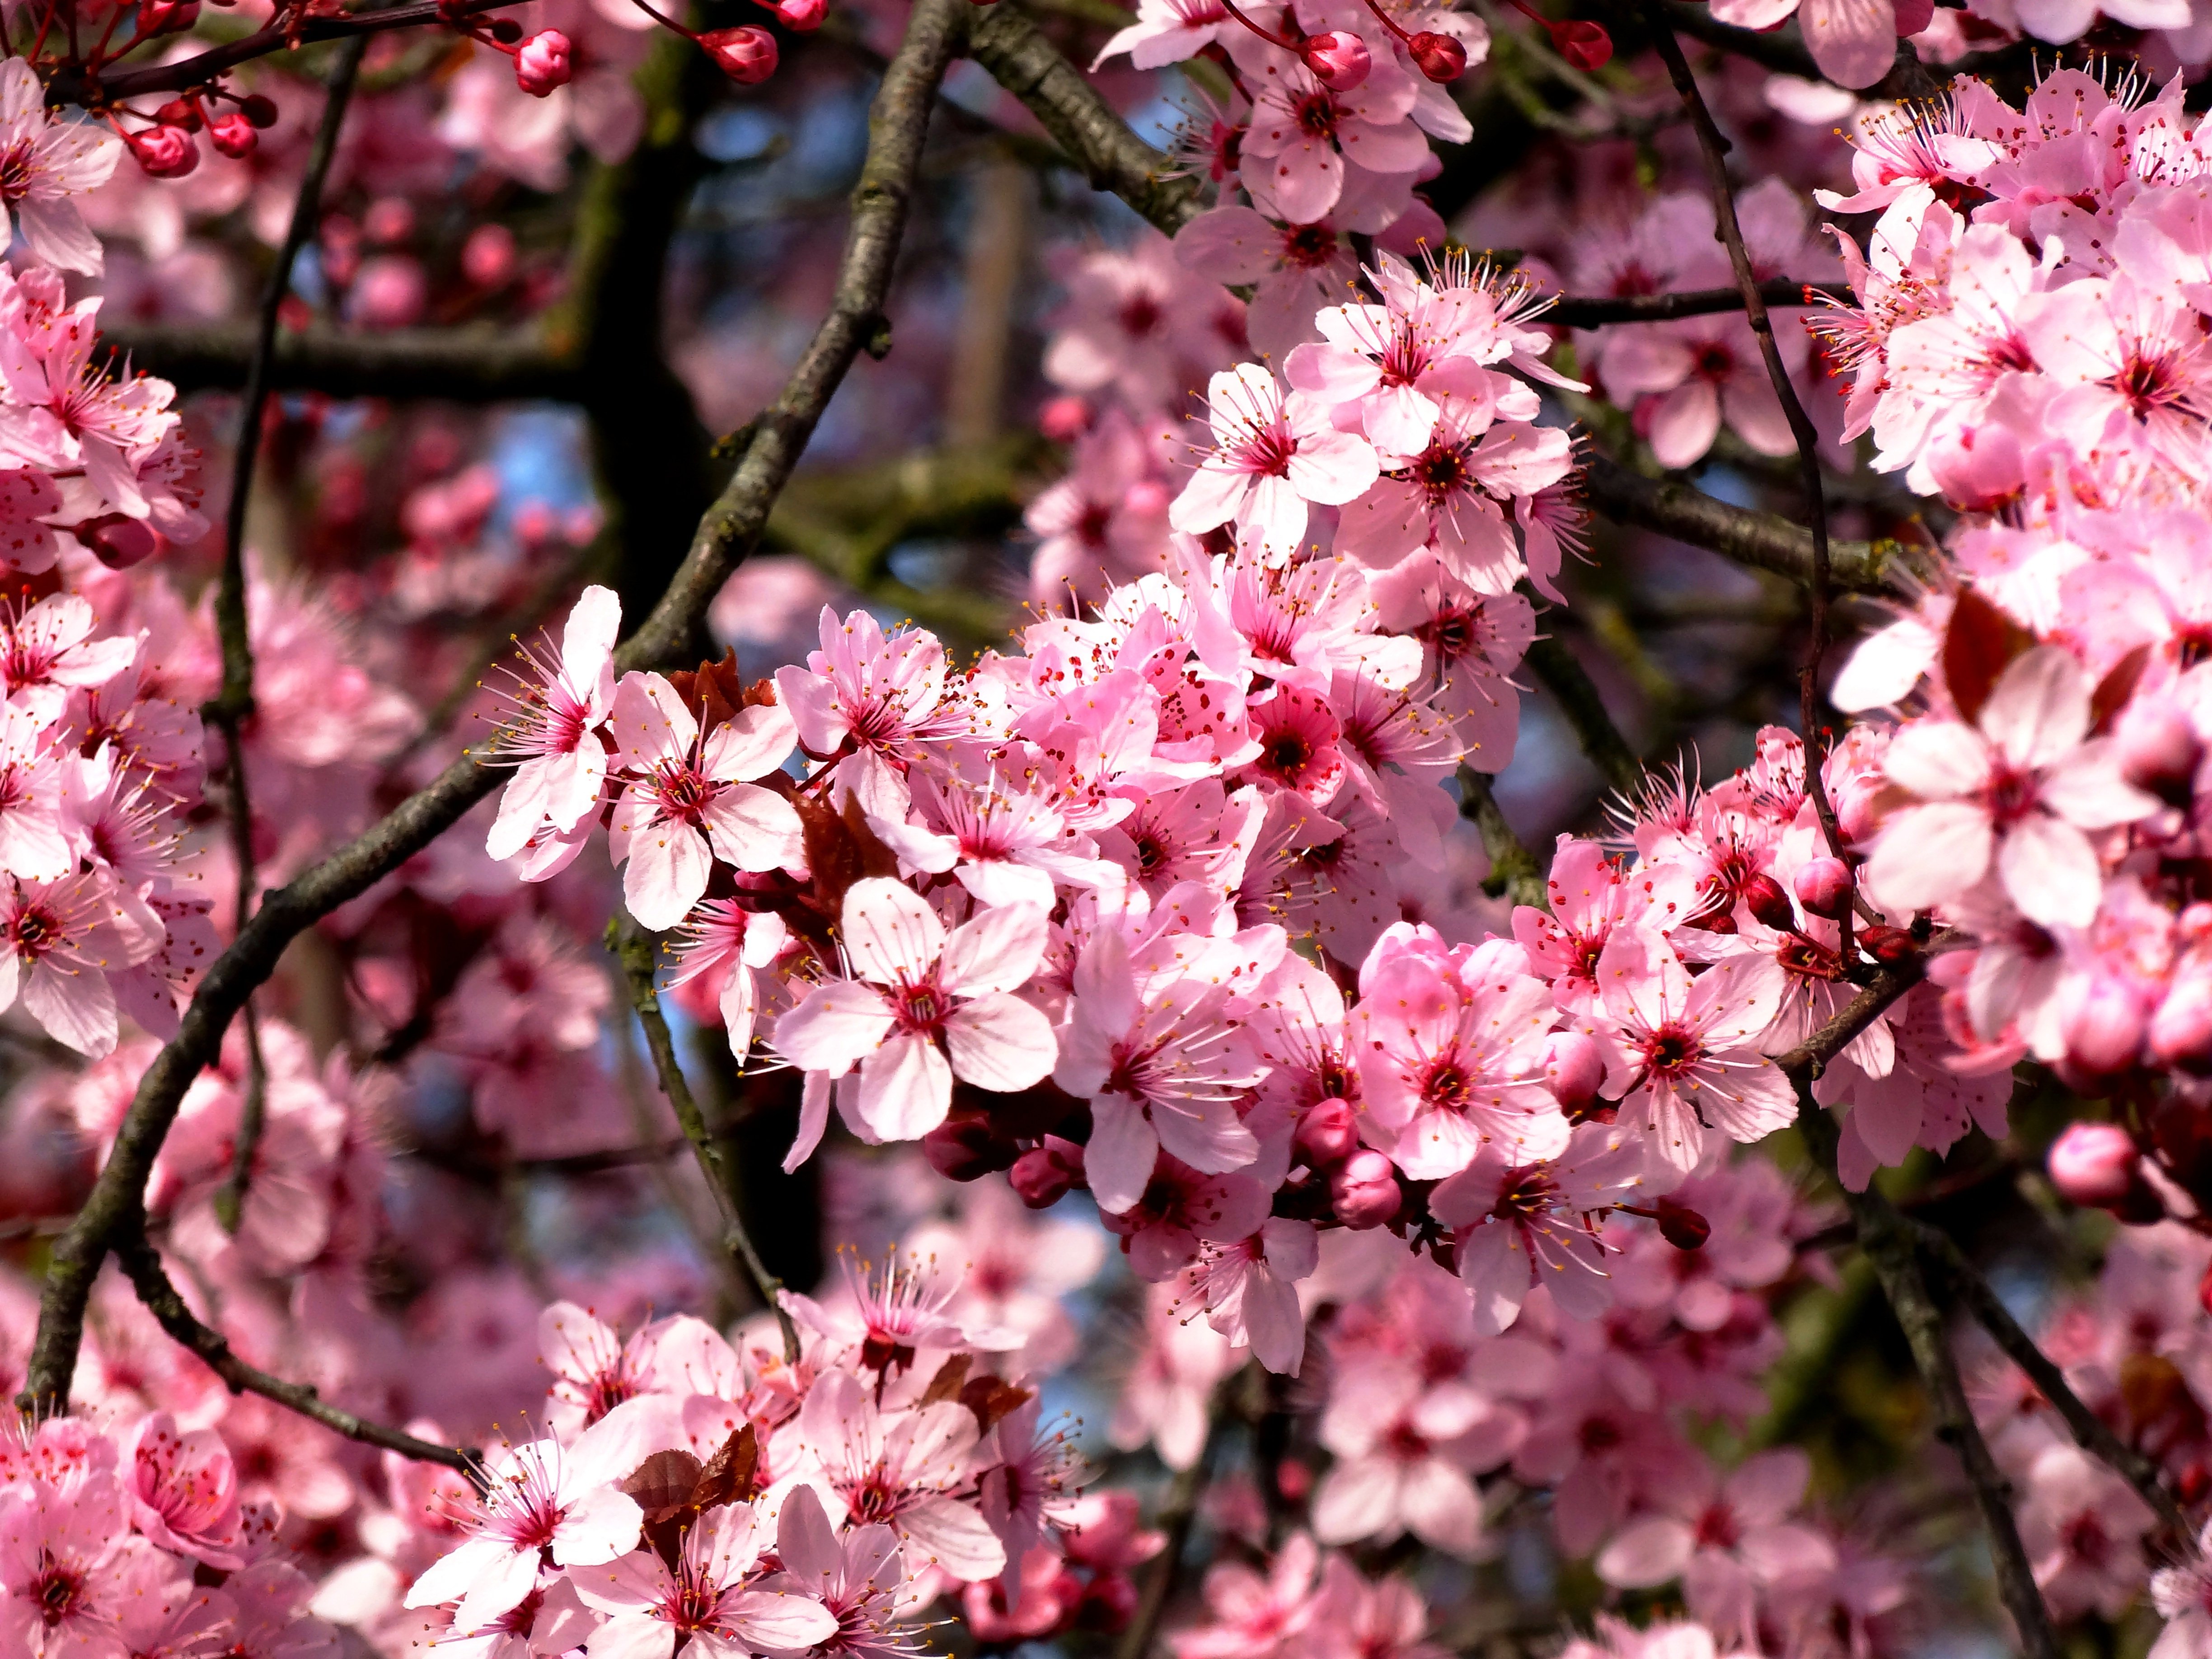 Almond blossom. Сакура миндаль. Сакура вишня, миндаль. Сакура (миндаль, вишня декоративная). Миндальное дерево цветение.